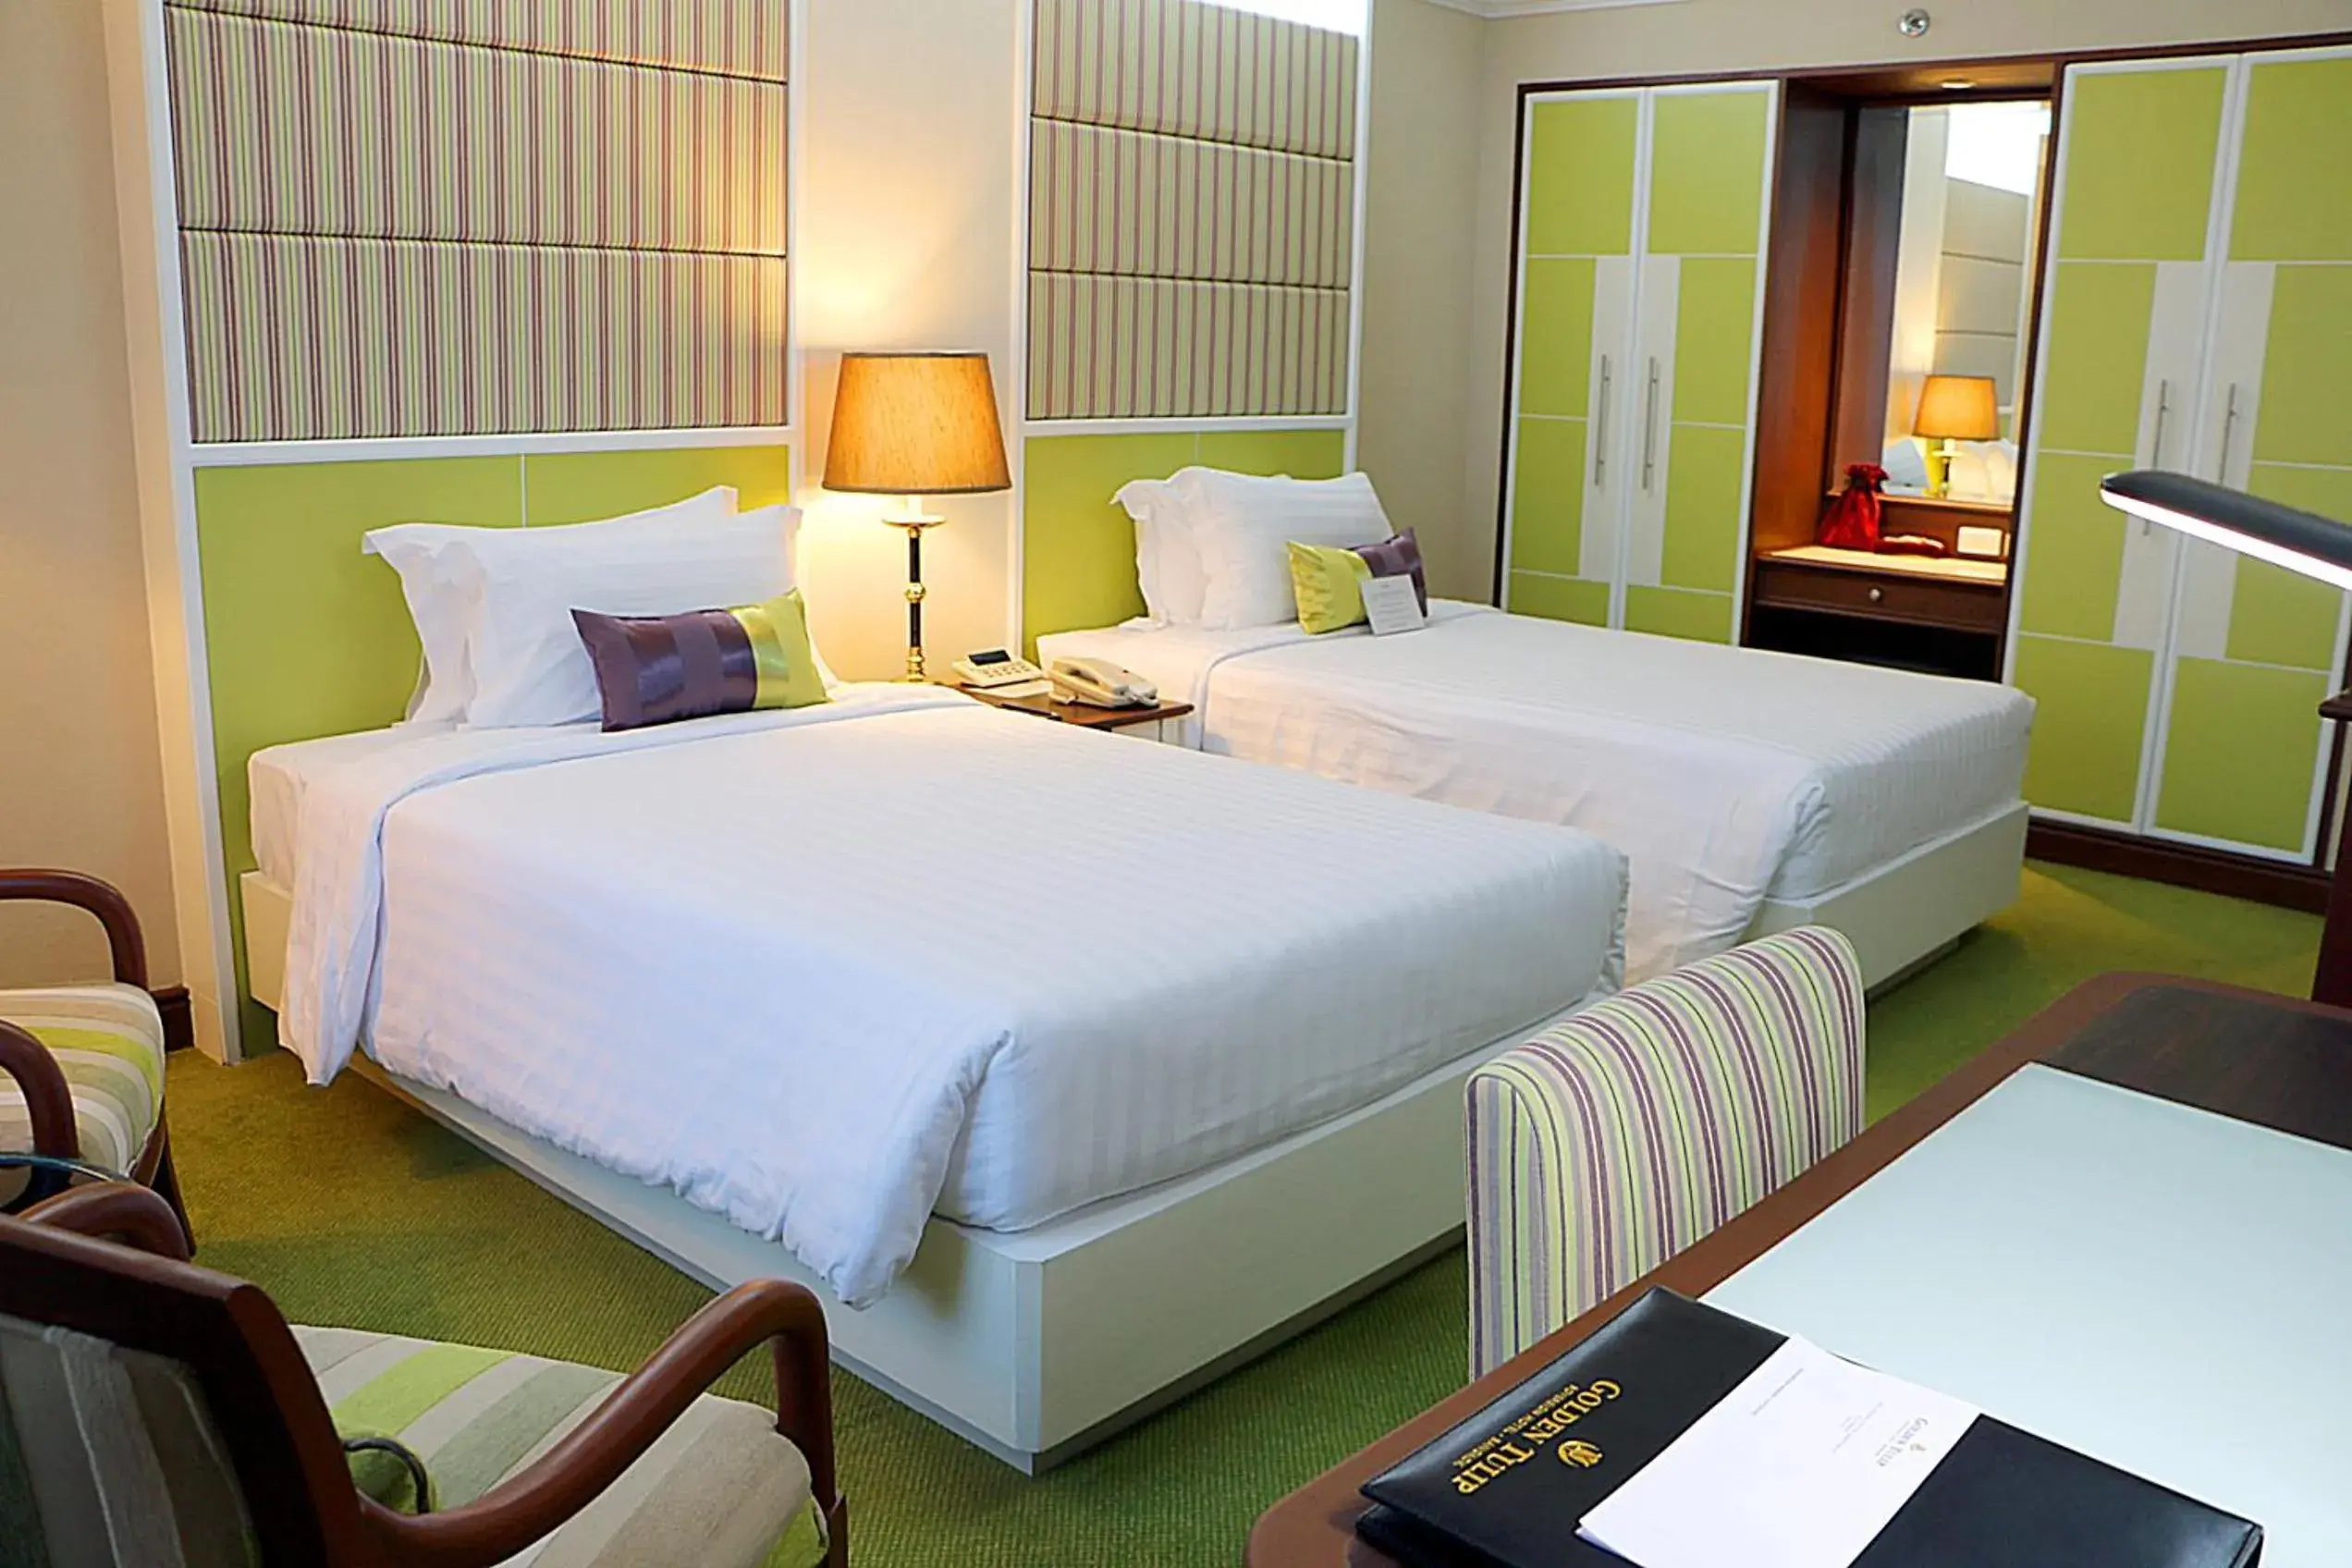 Bed in Golden Tulip Sovereign Hotel Bangkok